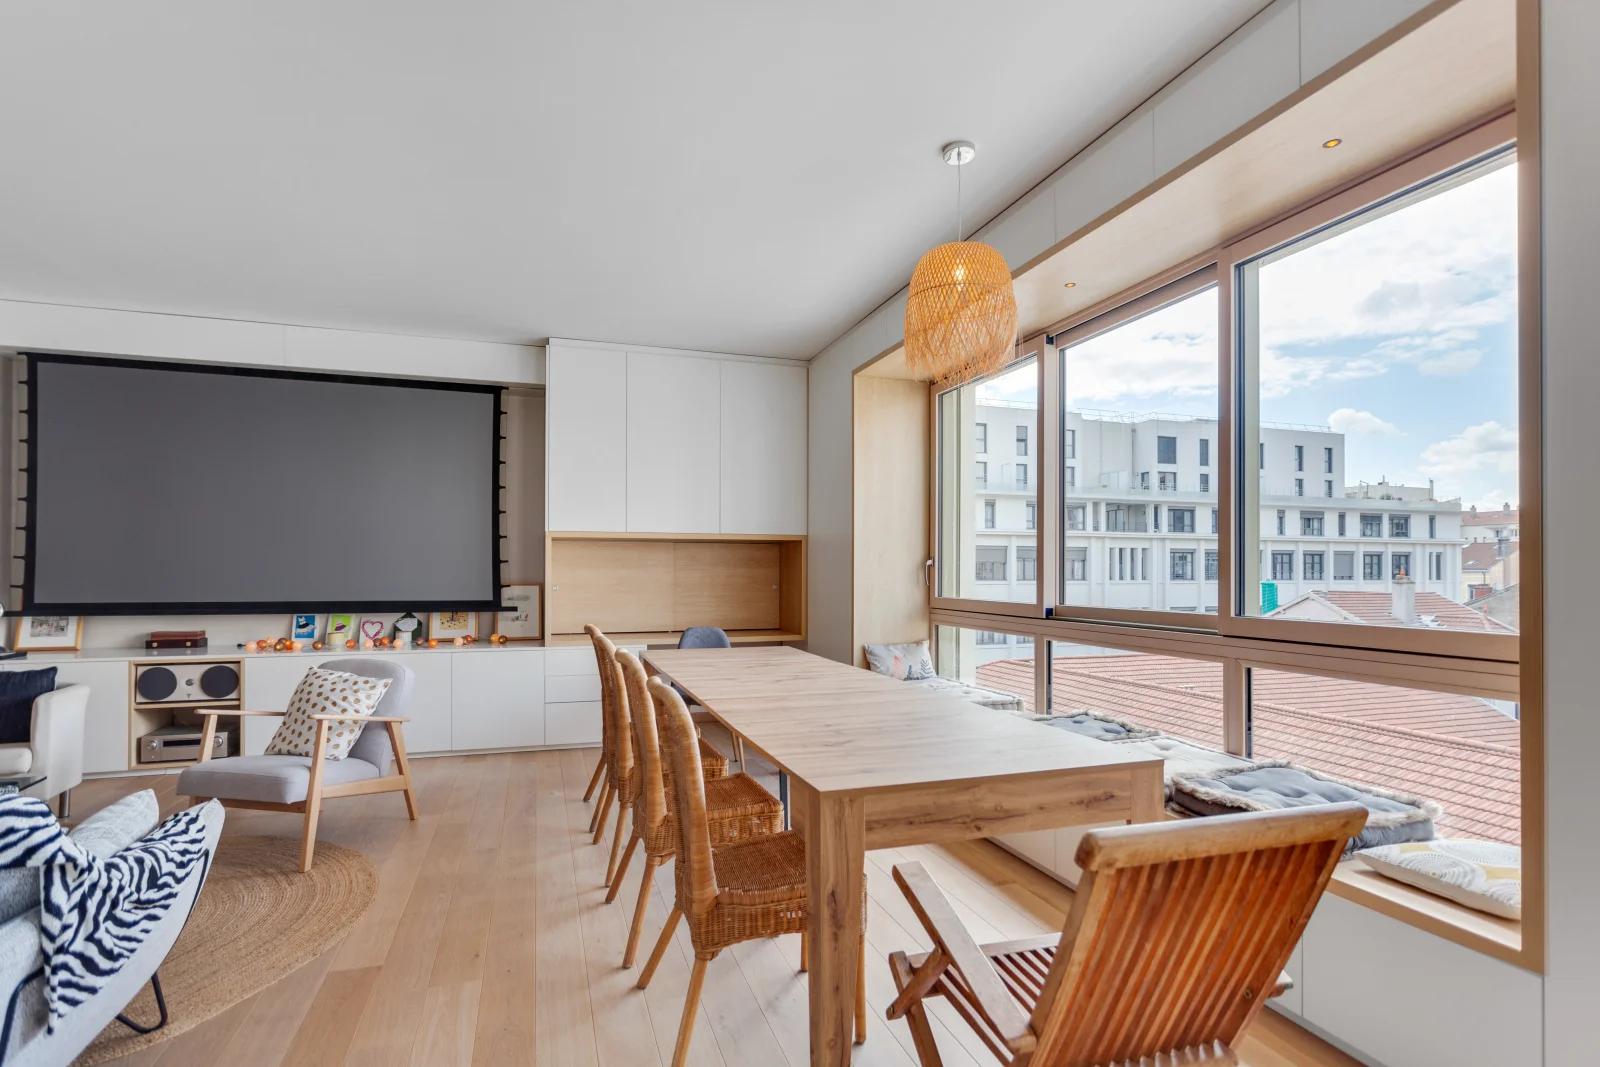 Meeting room in Appart. design bay window video-proj terrace - 0